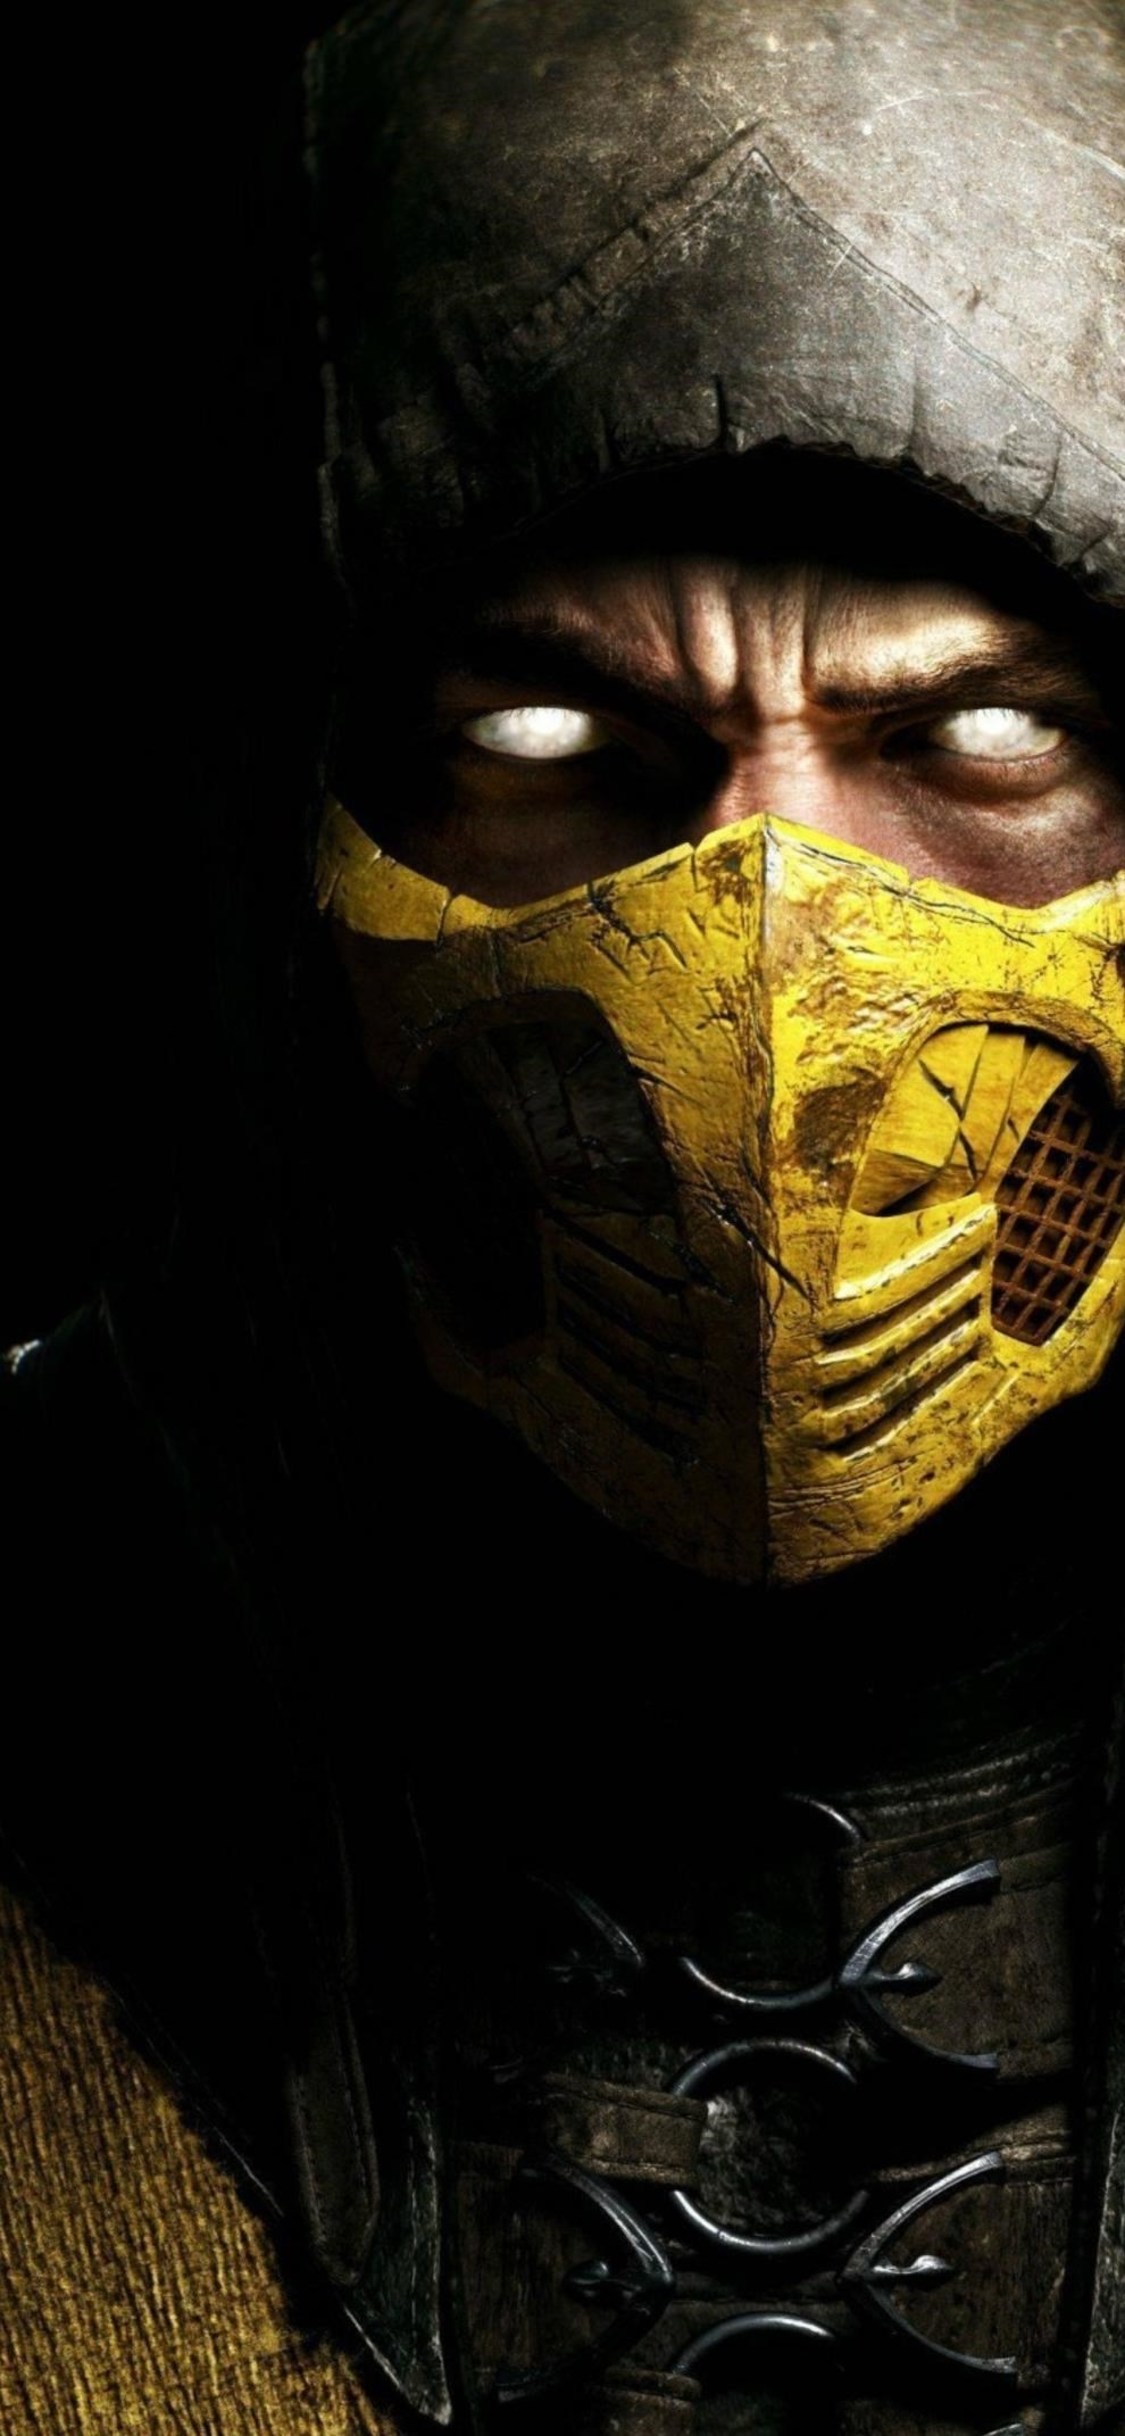 56+ Mortal Kombat X Wallpaper iPhone on WallpaperSafari